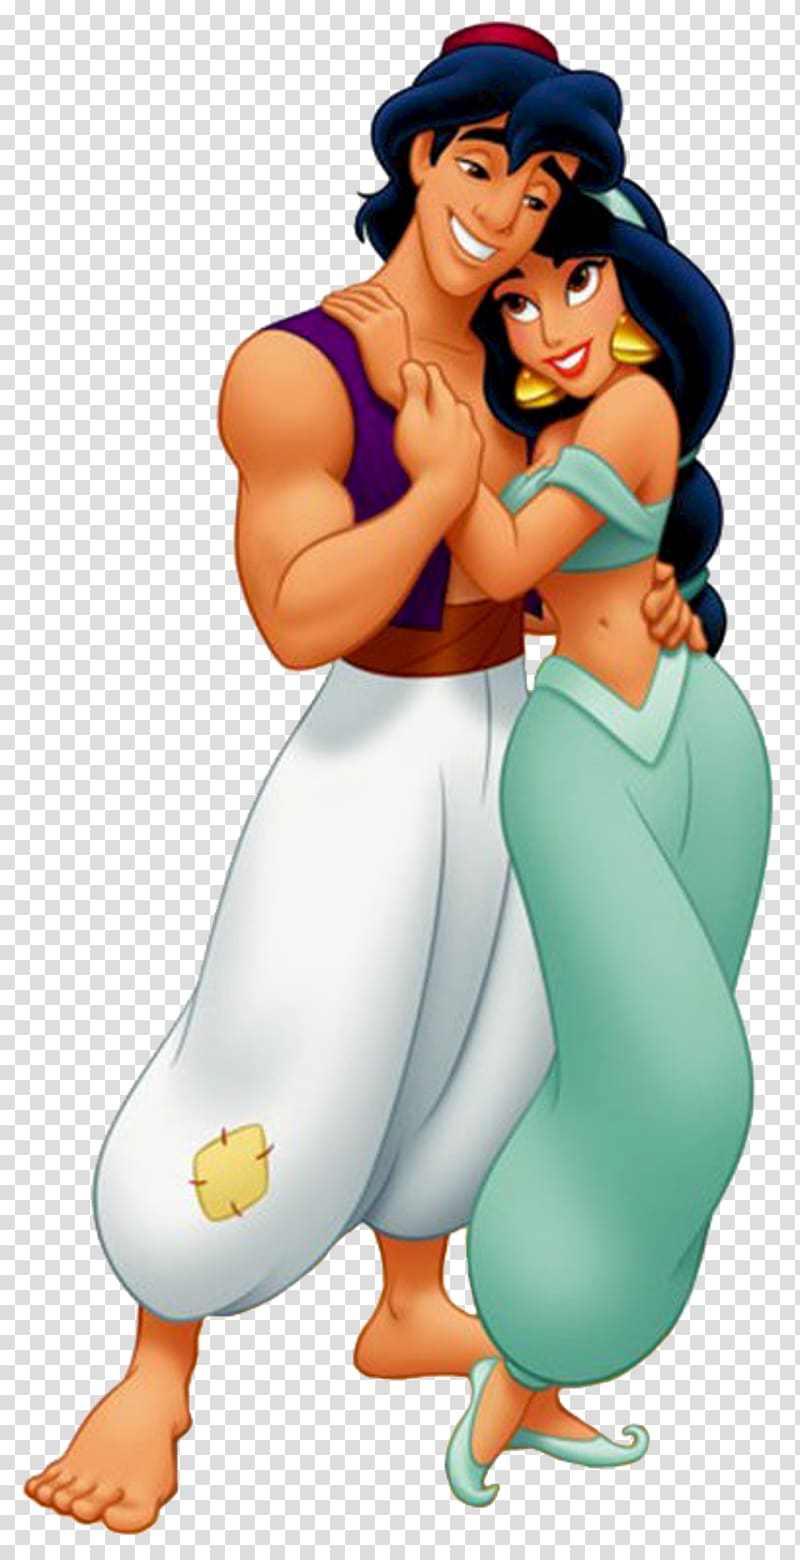 Disney Aladdin and Genie illustration, Genie Aladdin Princess